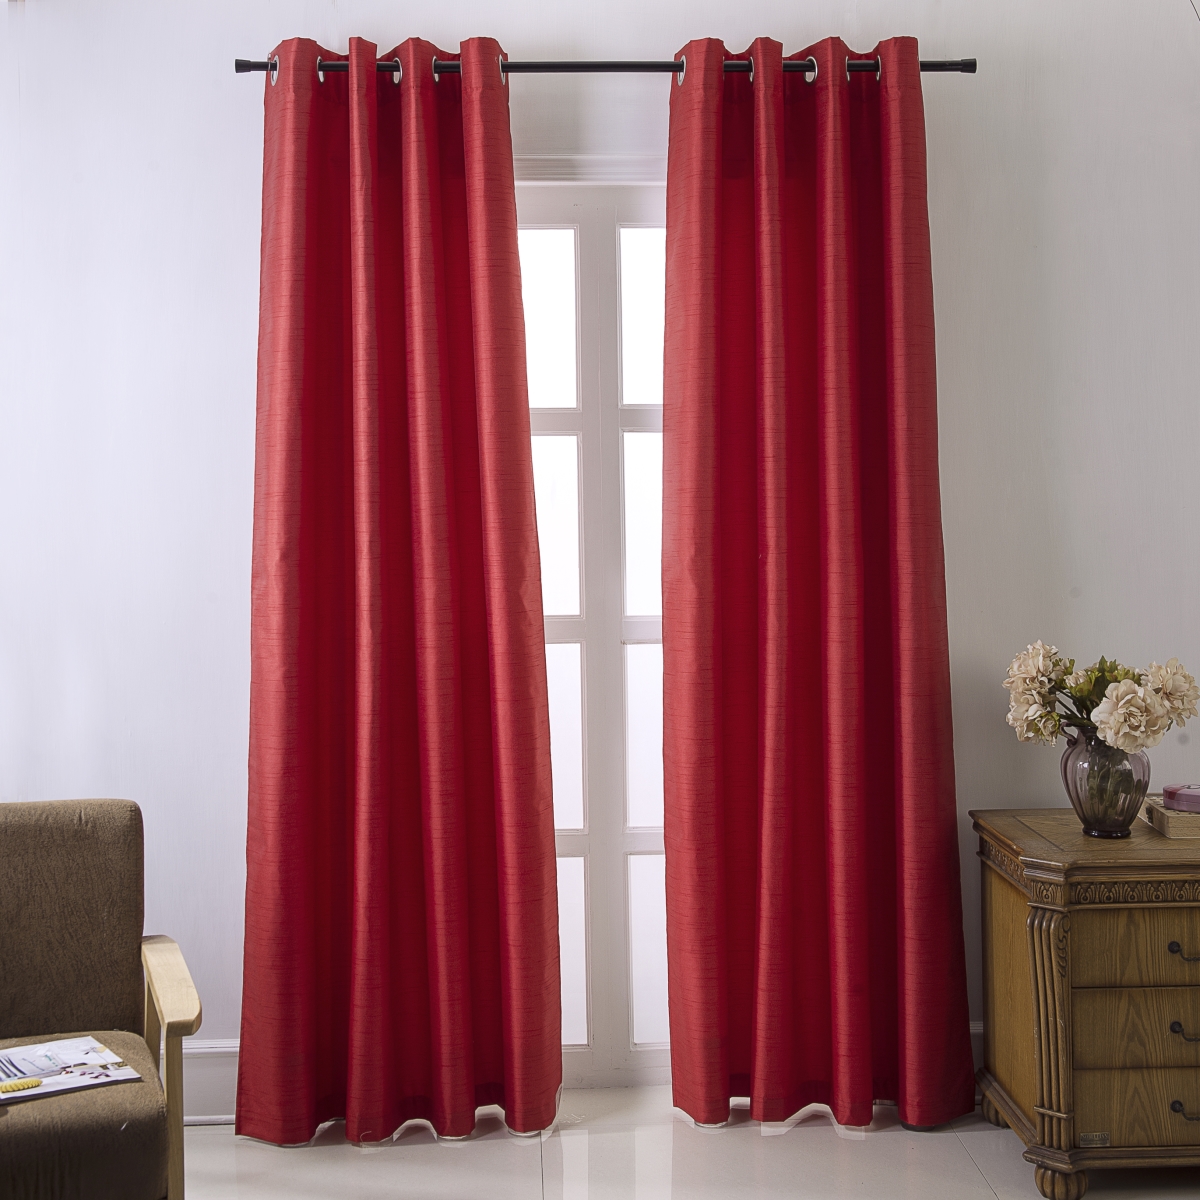 Pns18577 Shelton Faux Silk Room Darkening Grommet Single Curtain Panel In Red - 54 X 84 In.